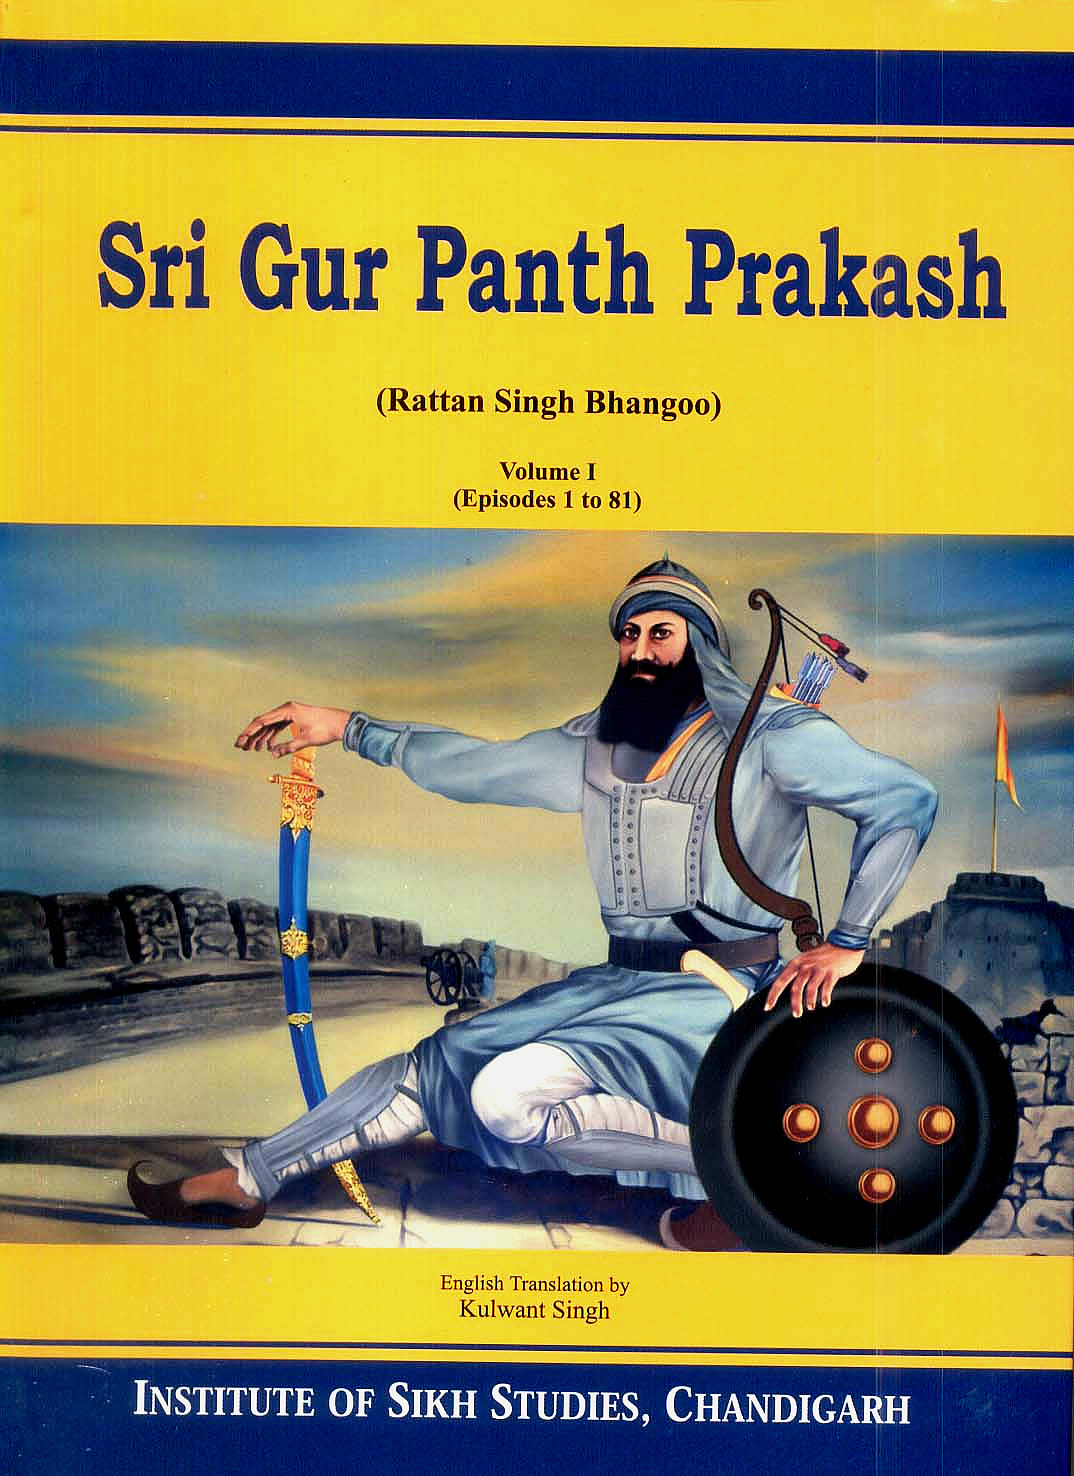 Gur Panth Parkash